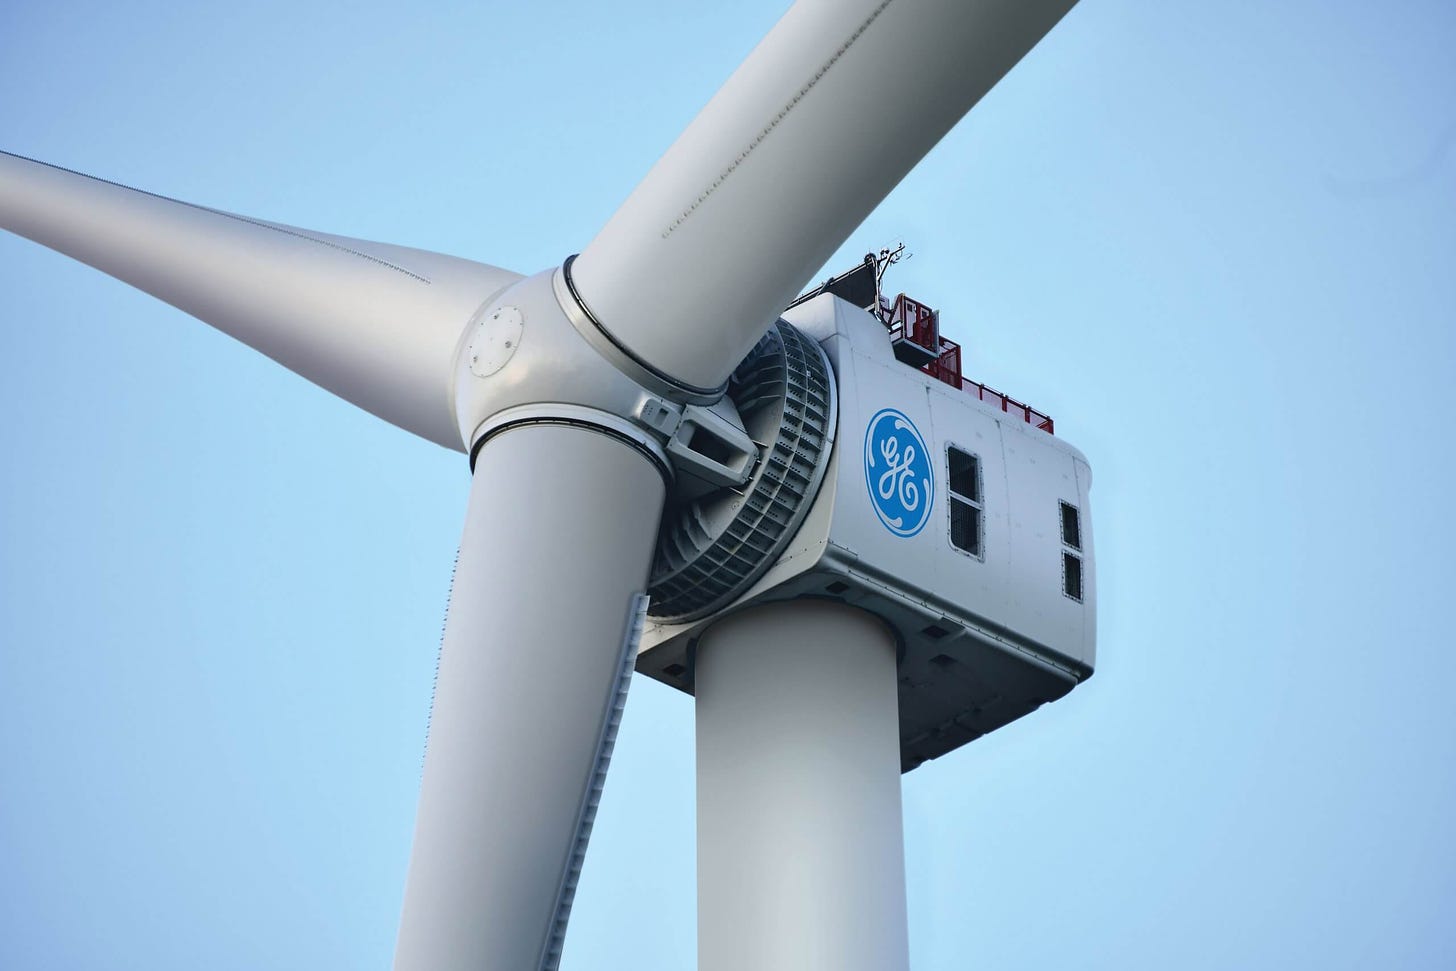 GE Haliade-X wind turbine optimized to 13-MW output